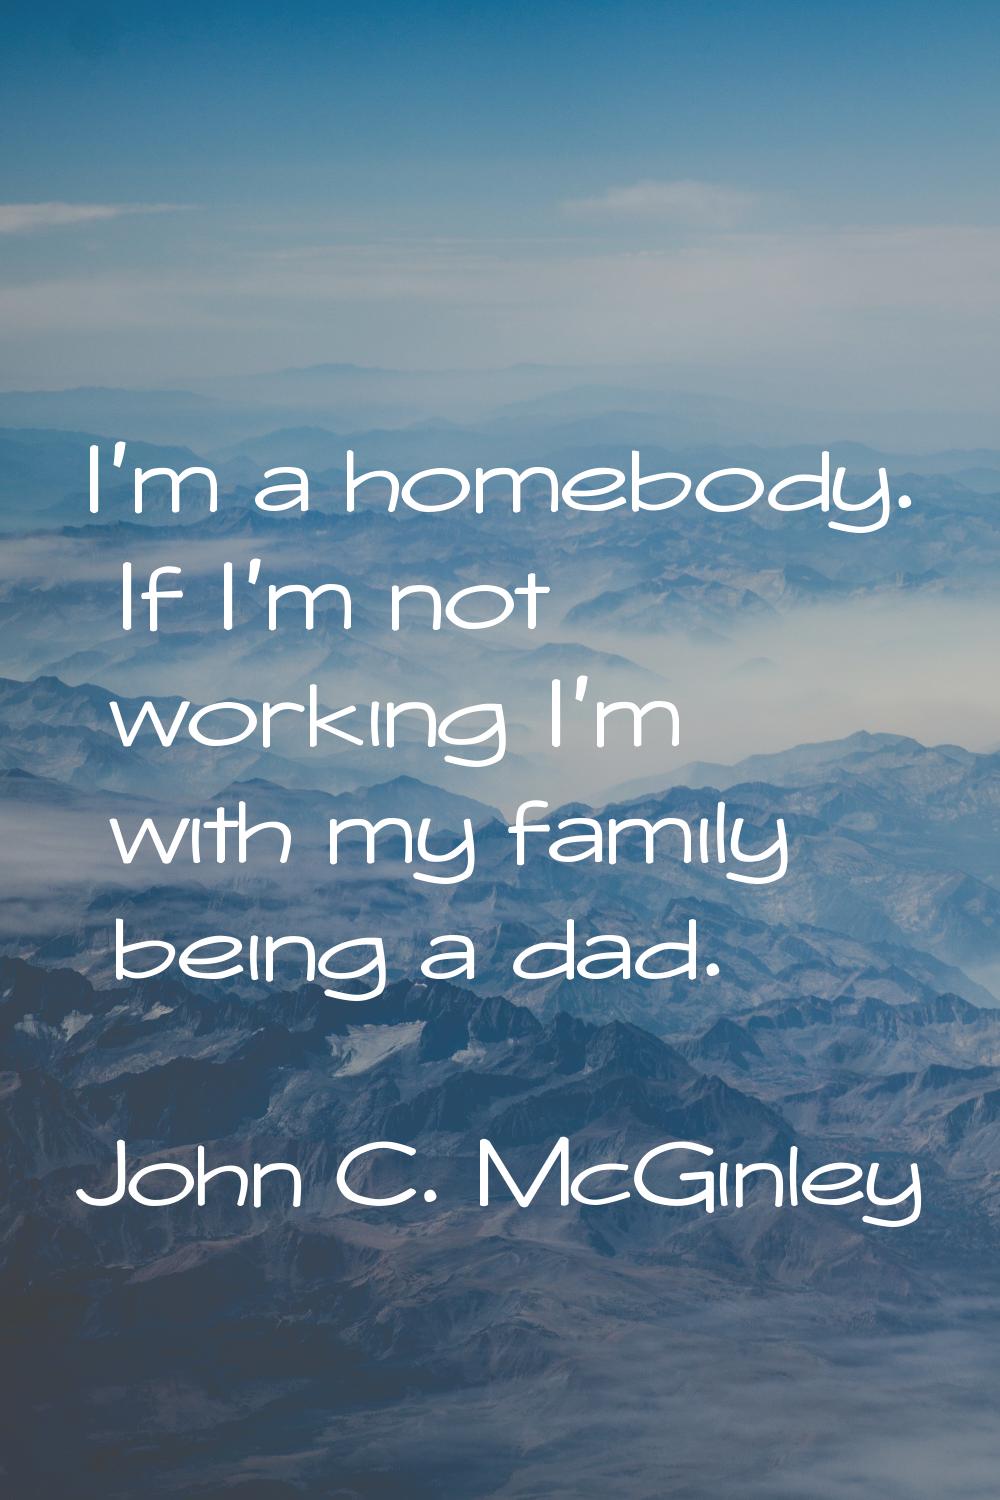 I'm a homebody. If I'm not working I'm with my family being a dad.